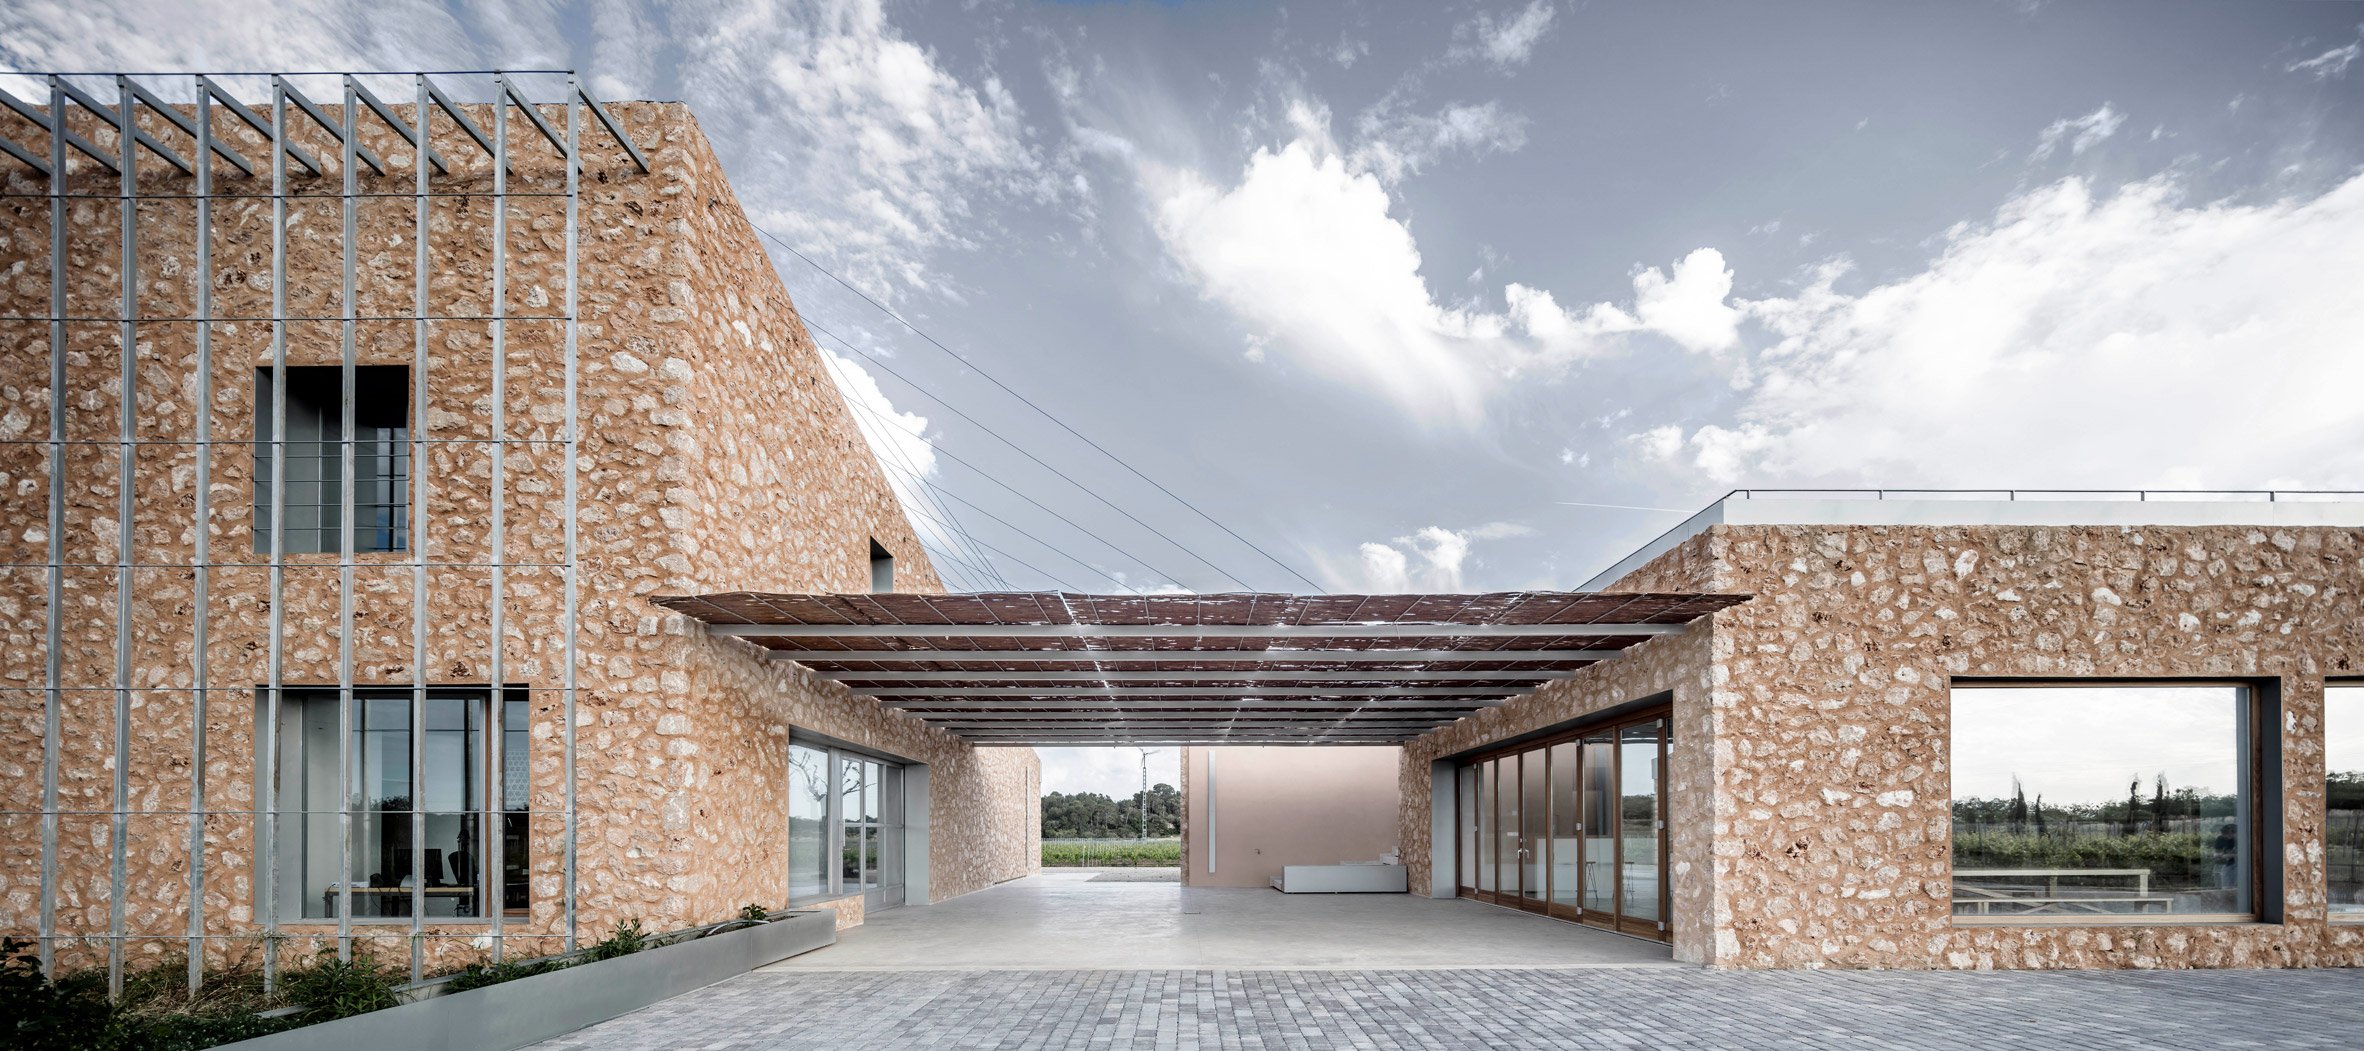 Son Juliana winery, Spain, by Munarq architects